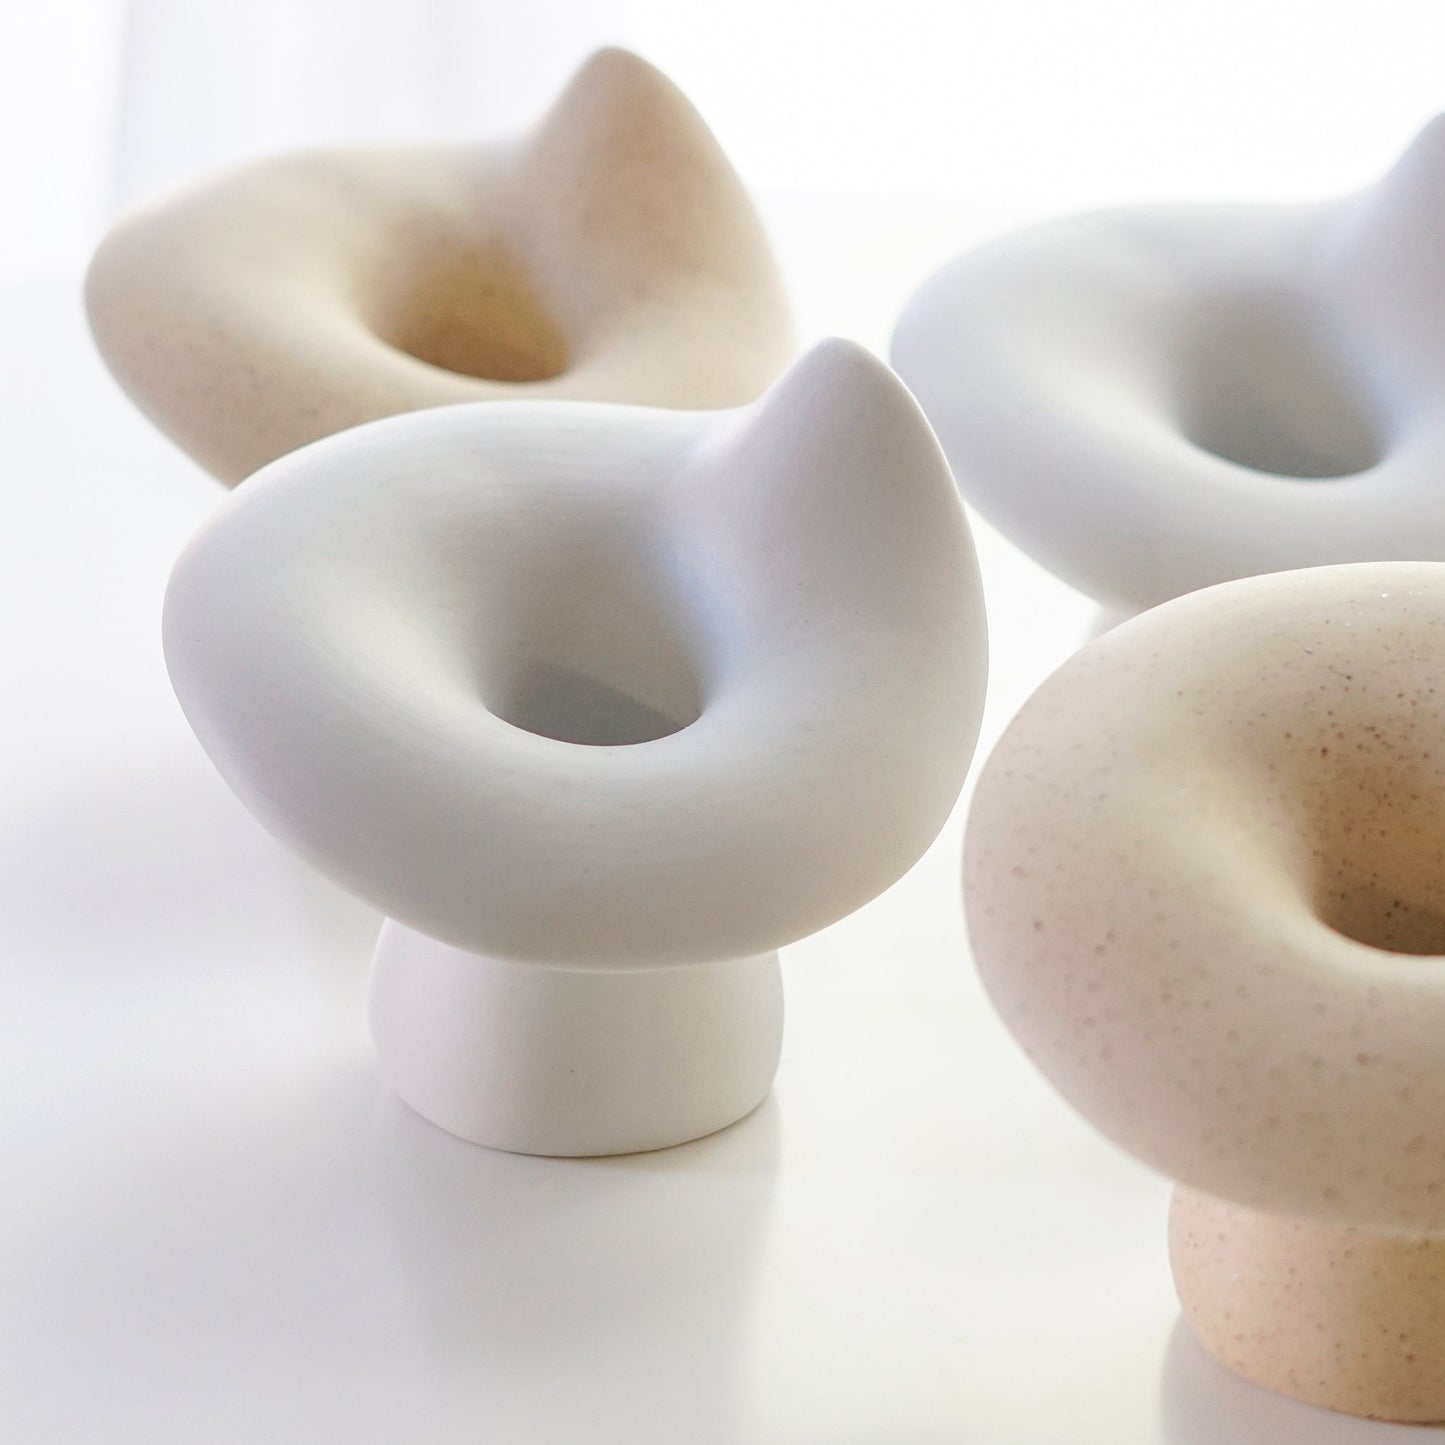 white mushroom ceramic candle holders and dotted beige mushroom shape candle holders